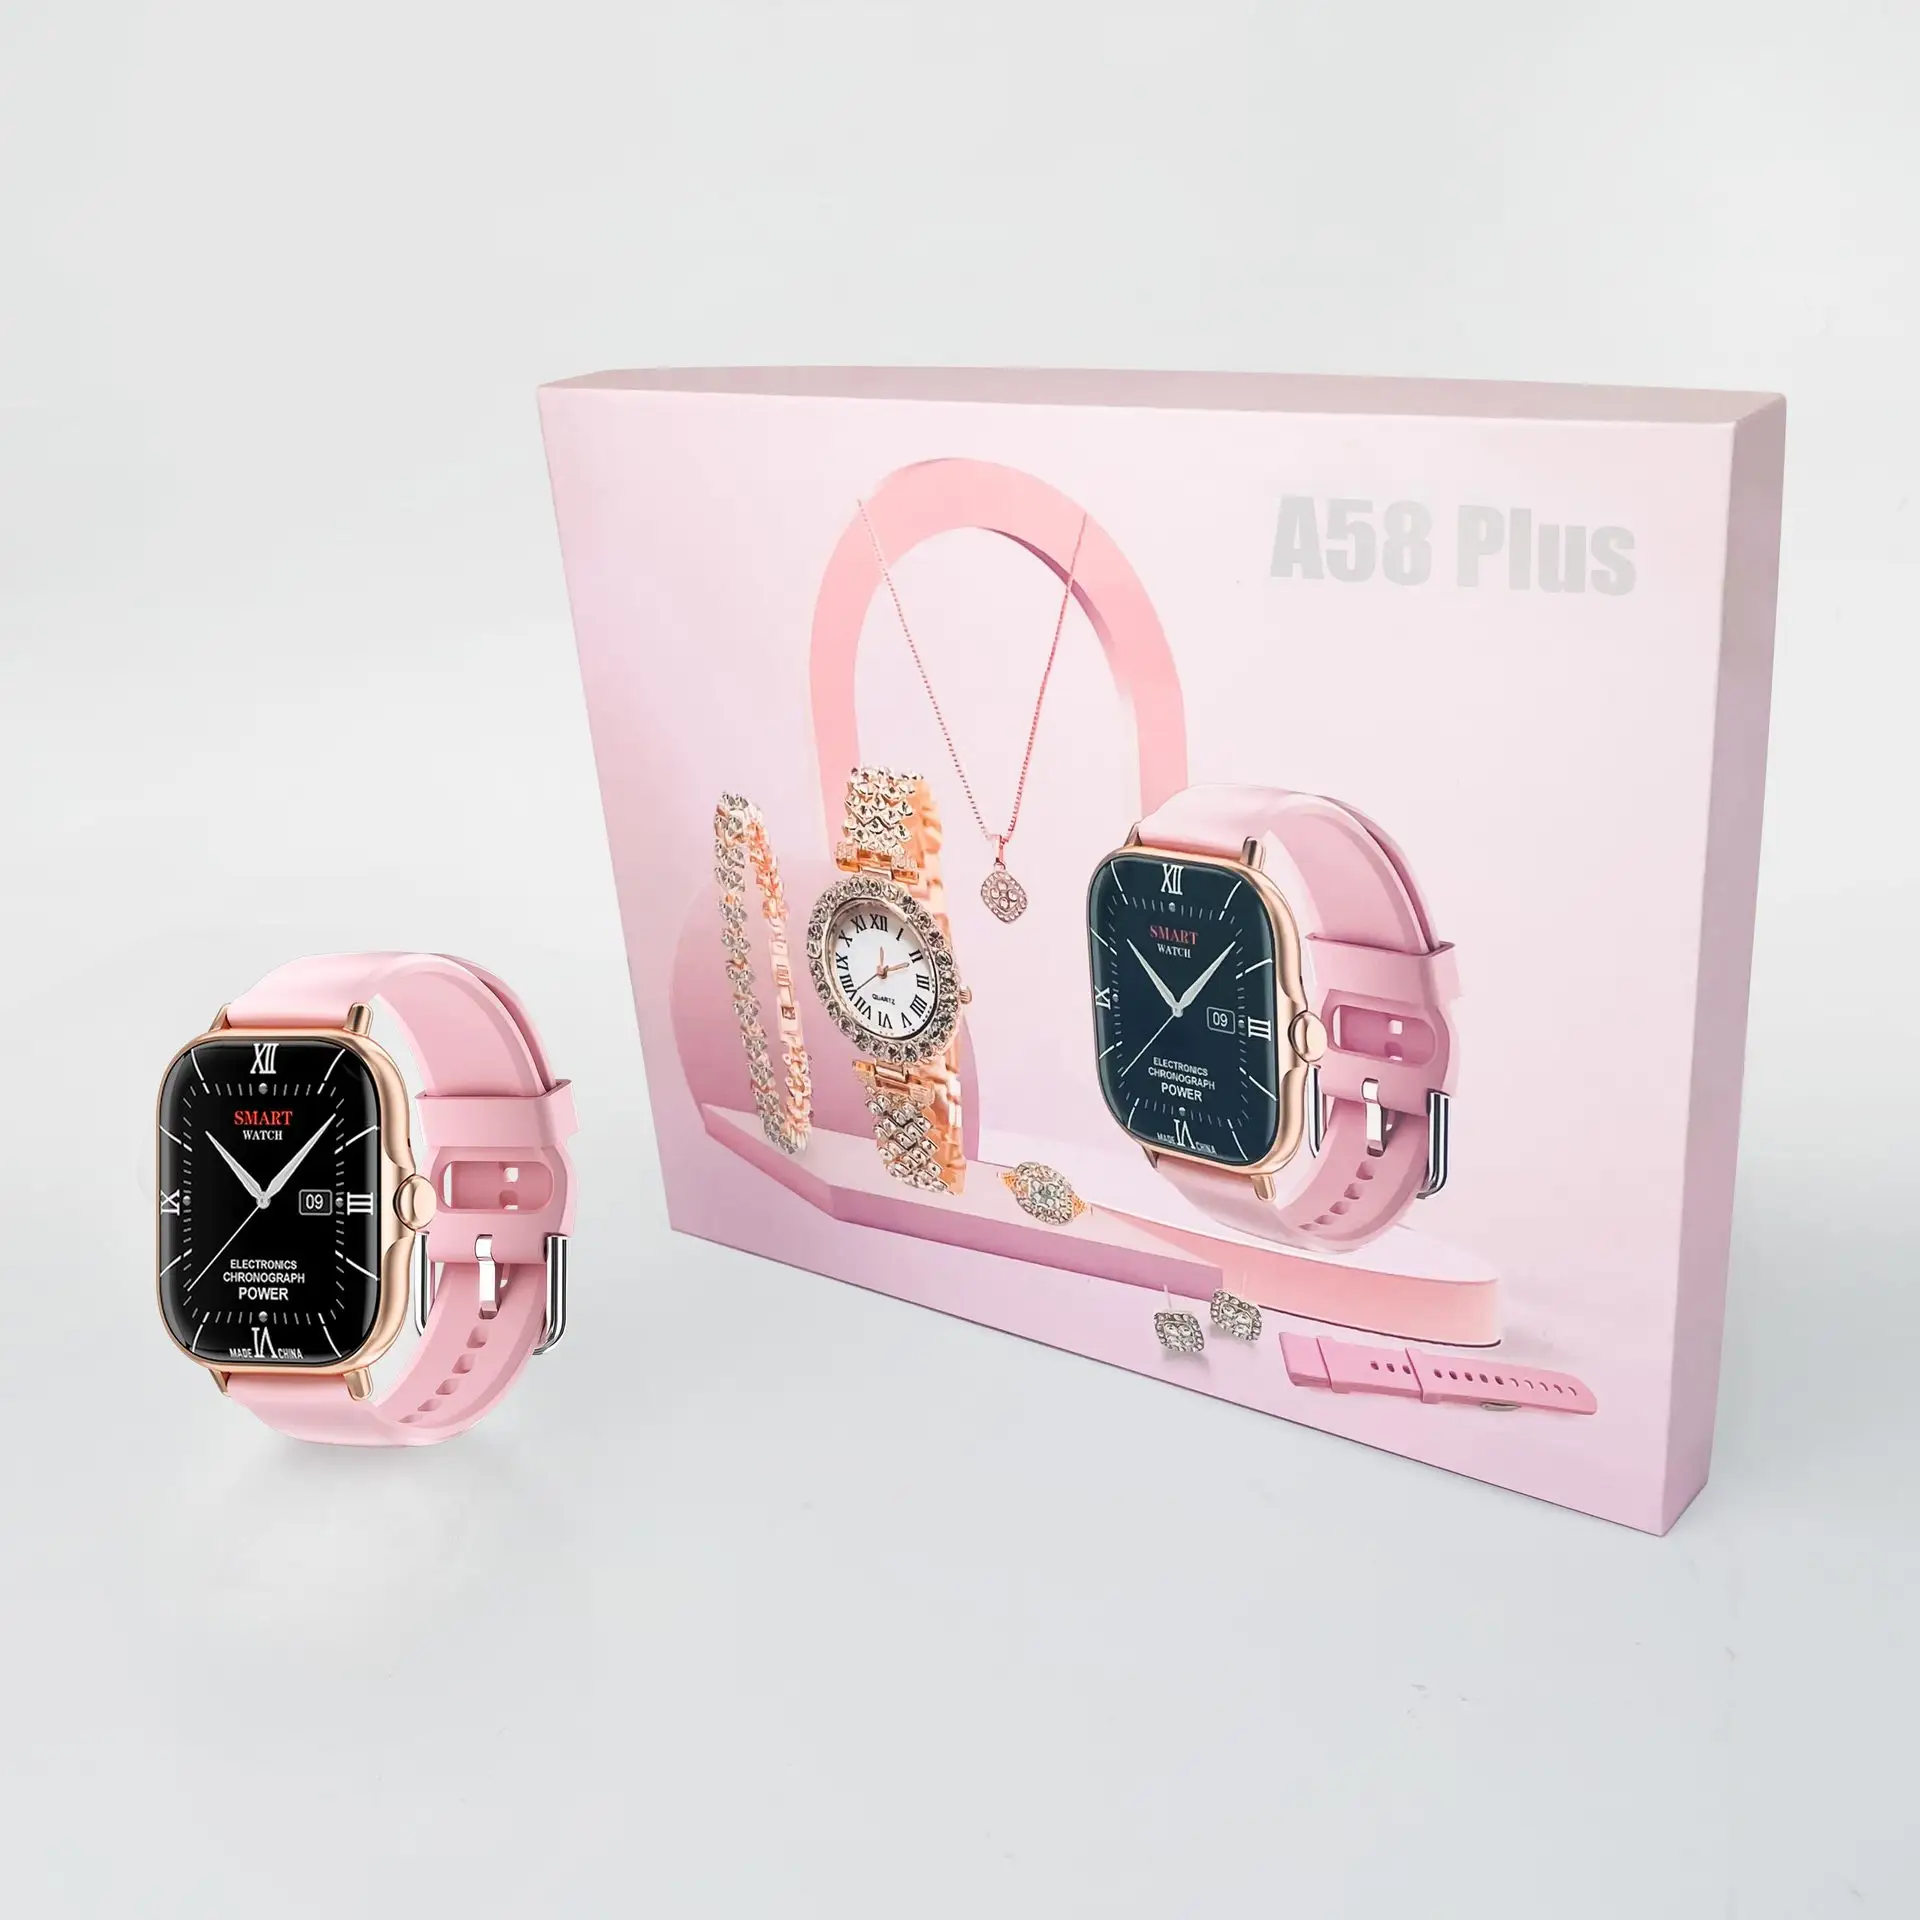 2024 Smartwatch 6 in 1 Suit A58plus Necklace Earrings Bracelet Ring A58 plus Smartwatch Luxury Gift Box Packaging For Women